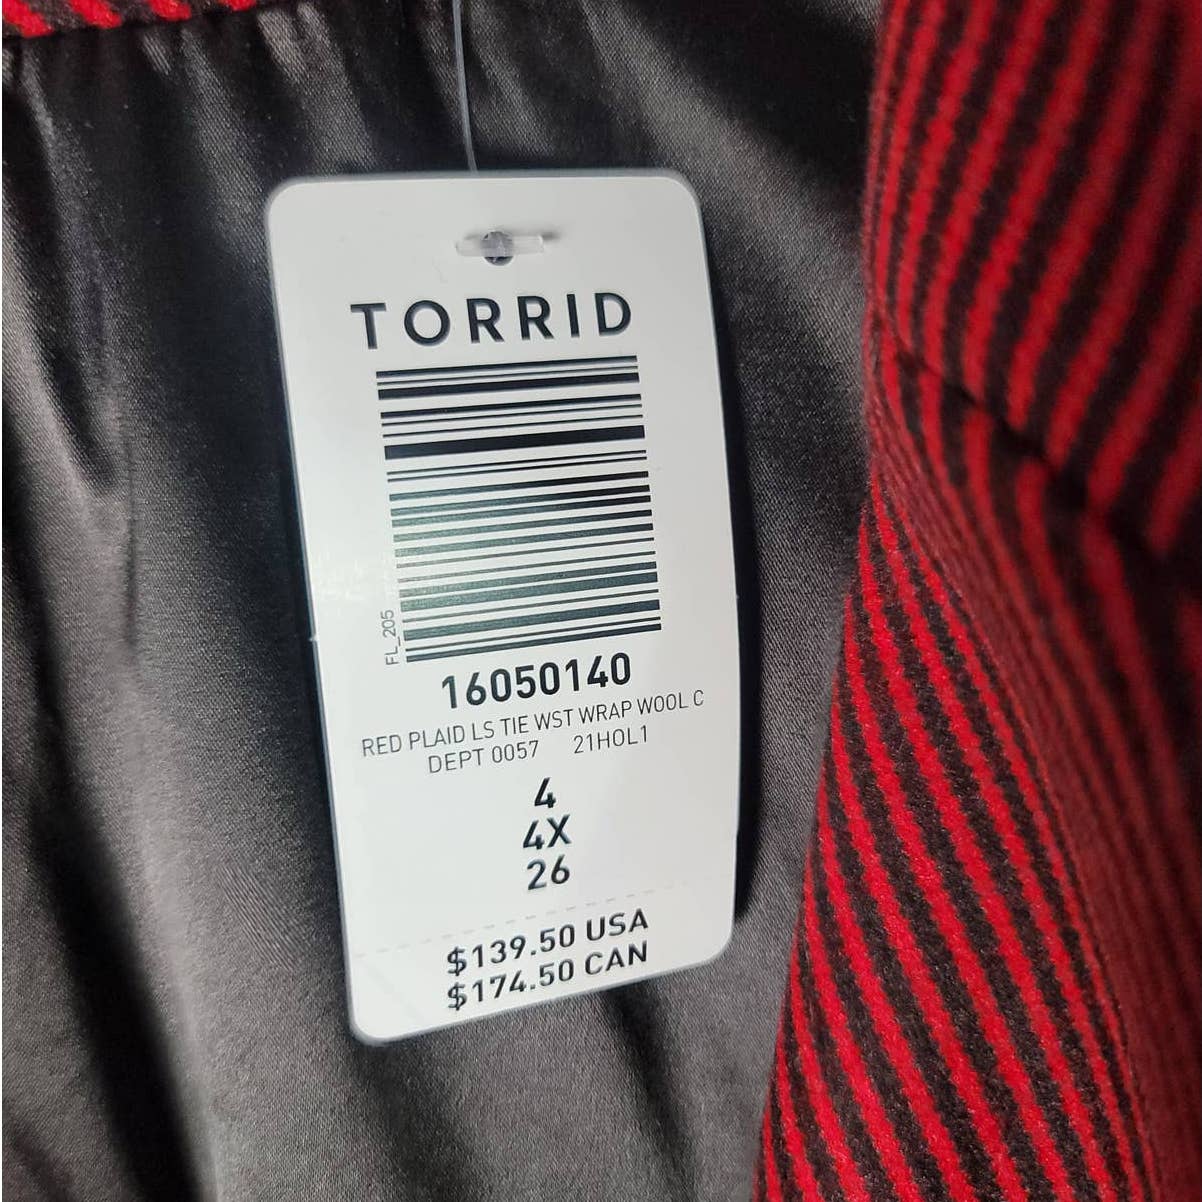 Torrid Peacoat Jacket Buffalo Plaid Long Line Self Tie Plus Size 4/4X